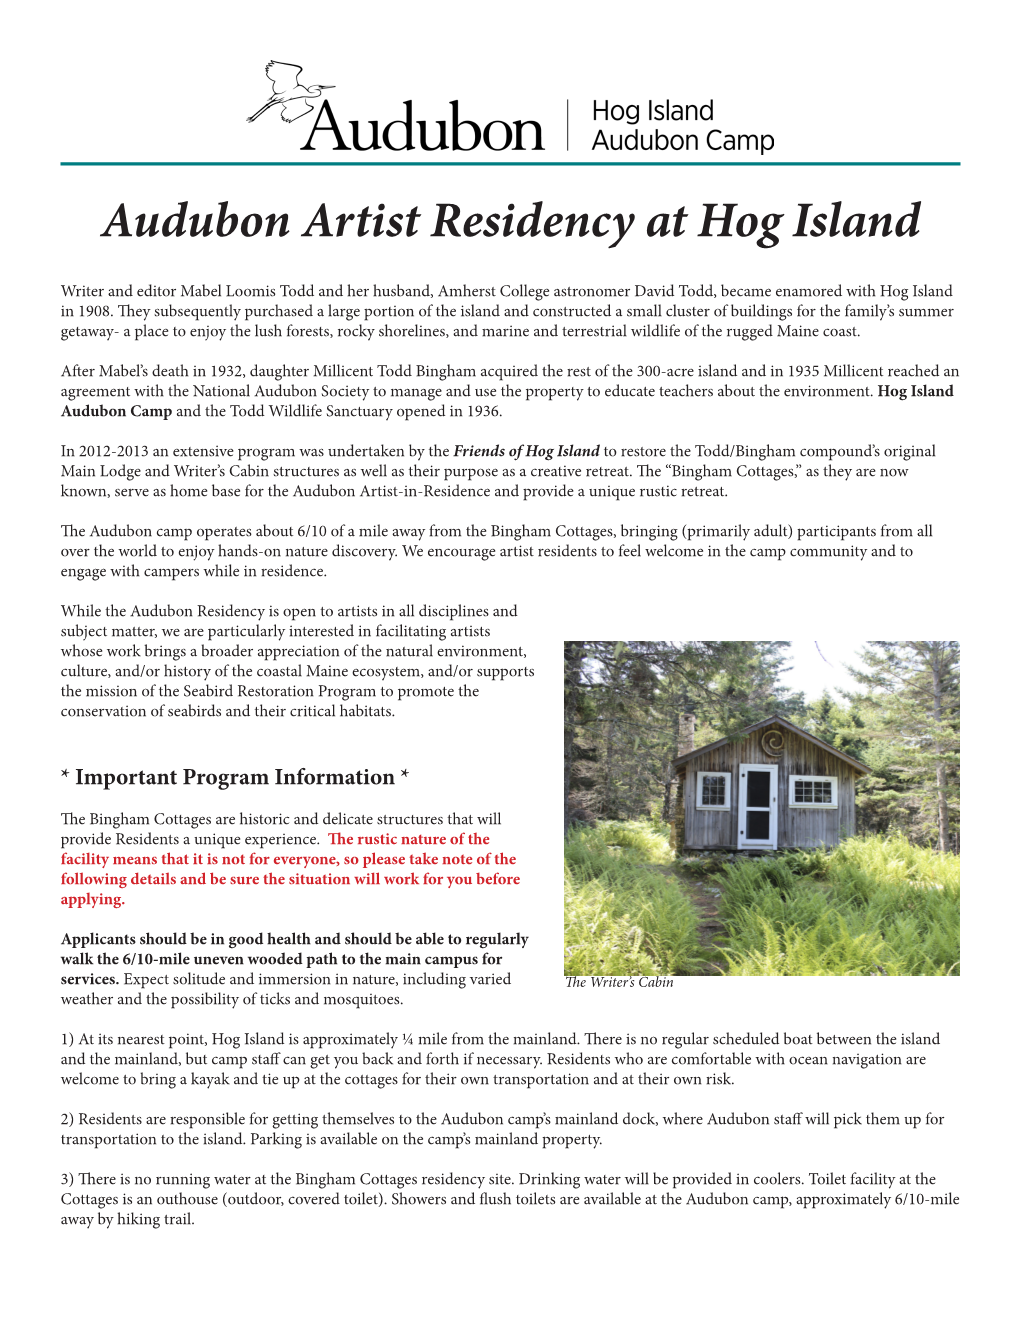 Audubon Artist Residency at Hog Island